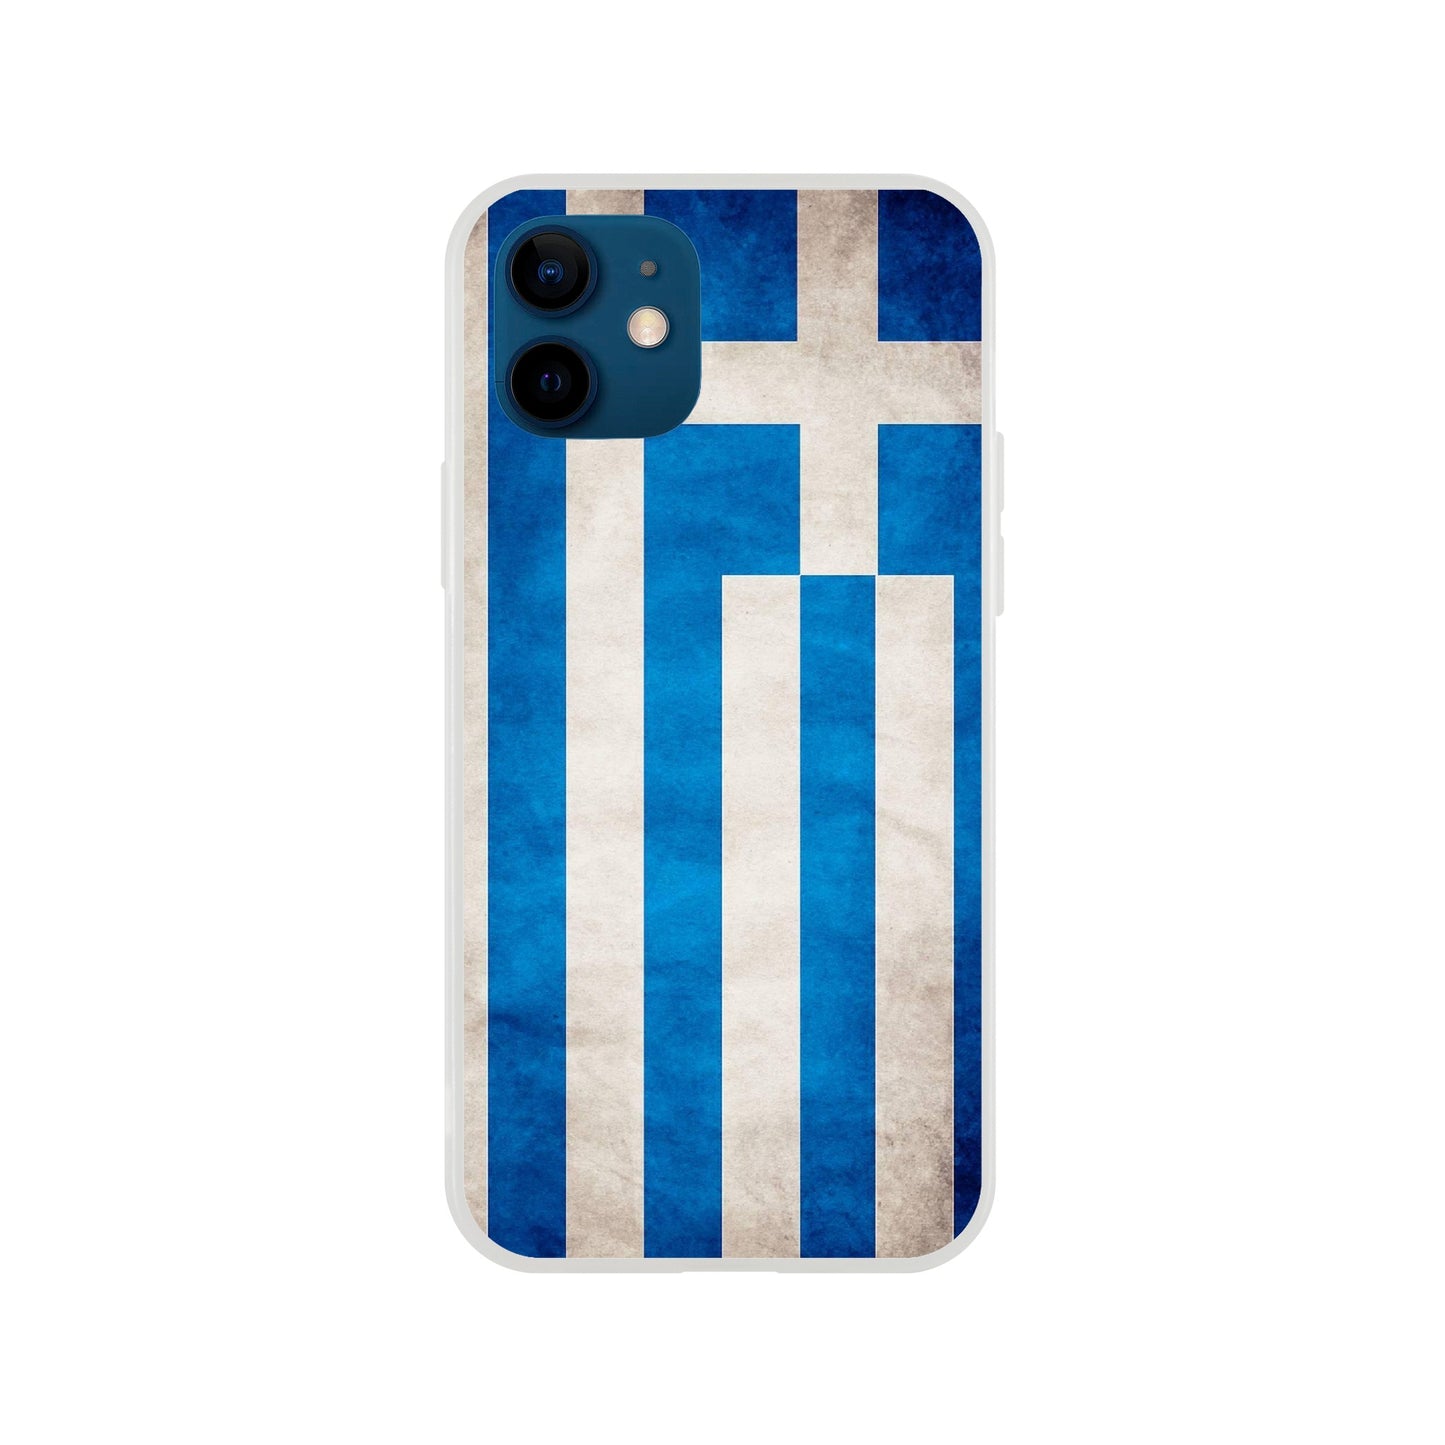 Griechenland - Flexi Case